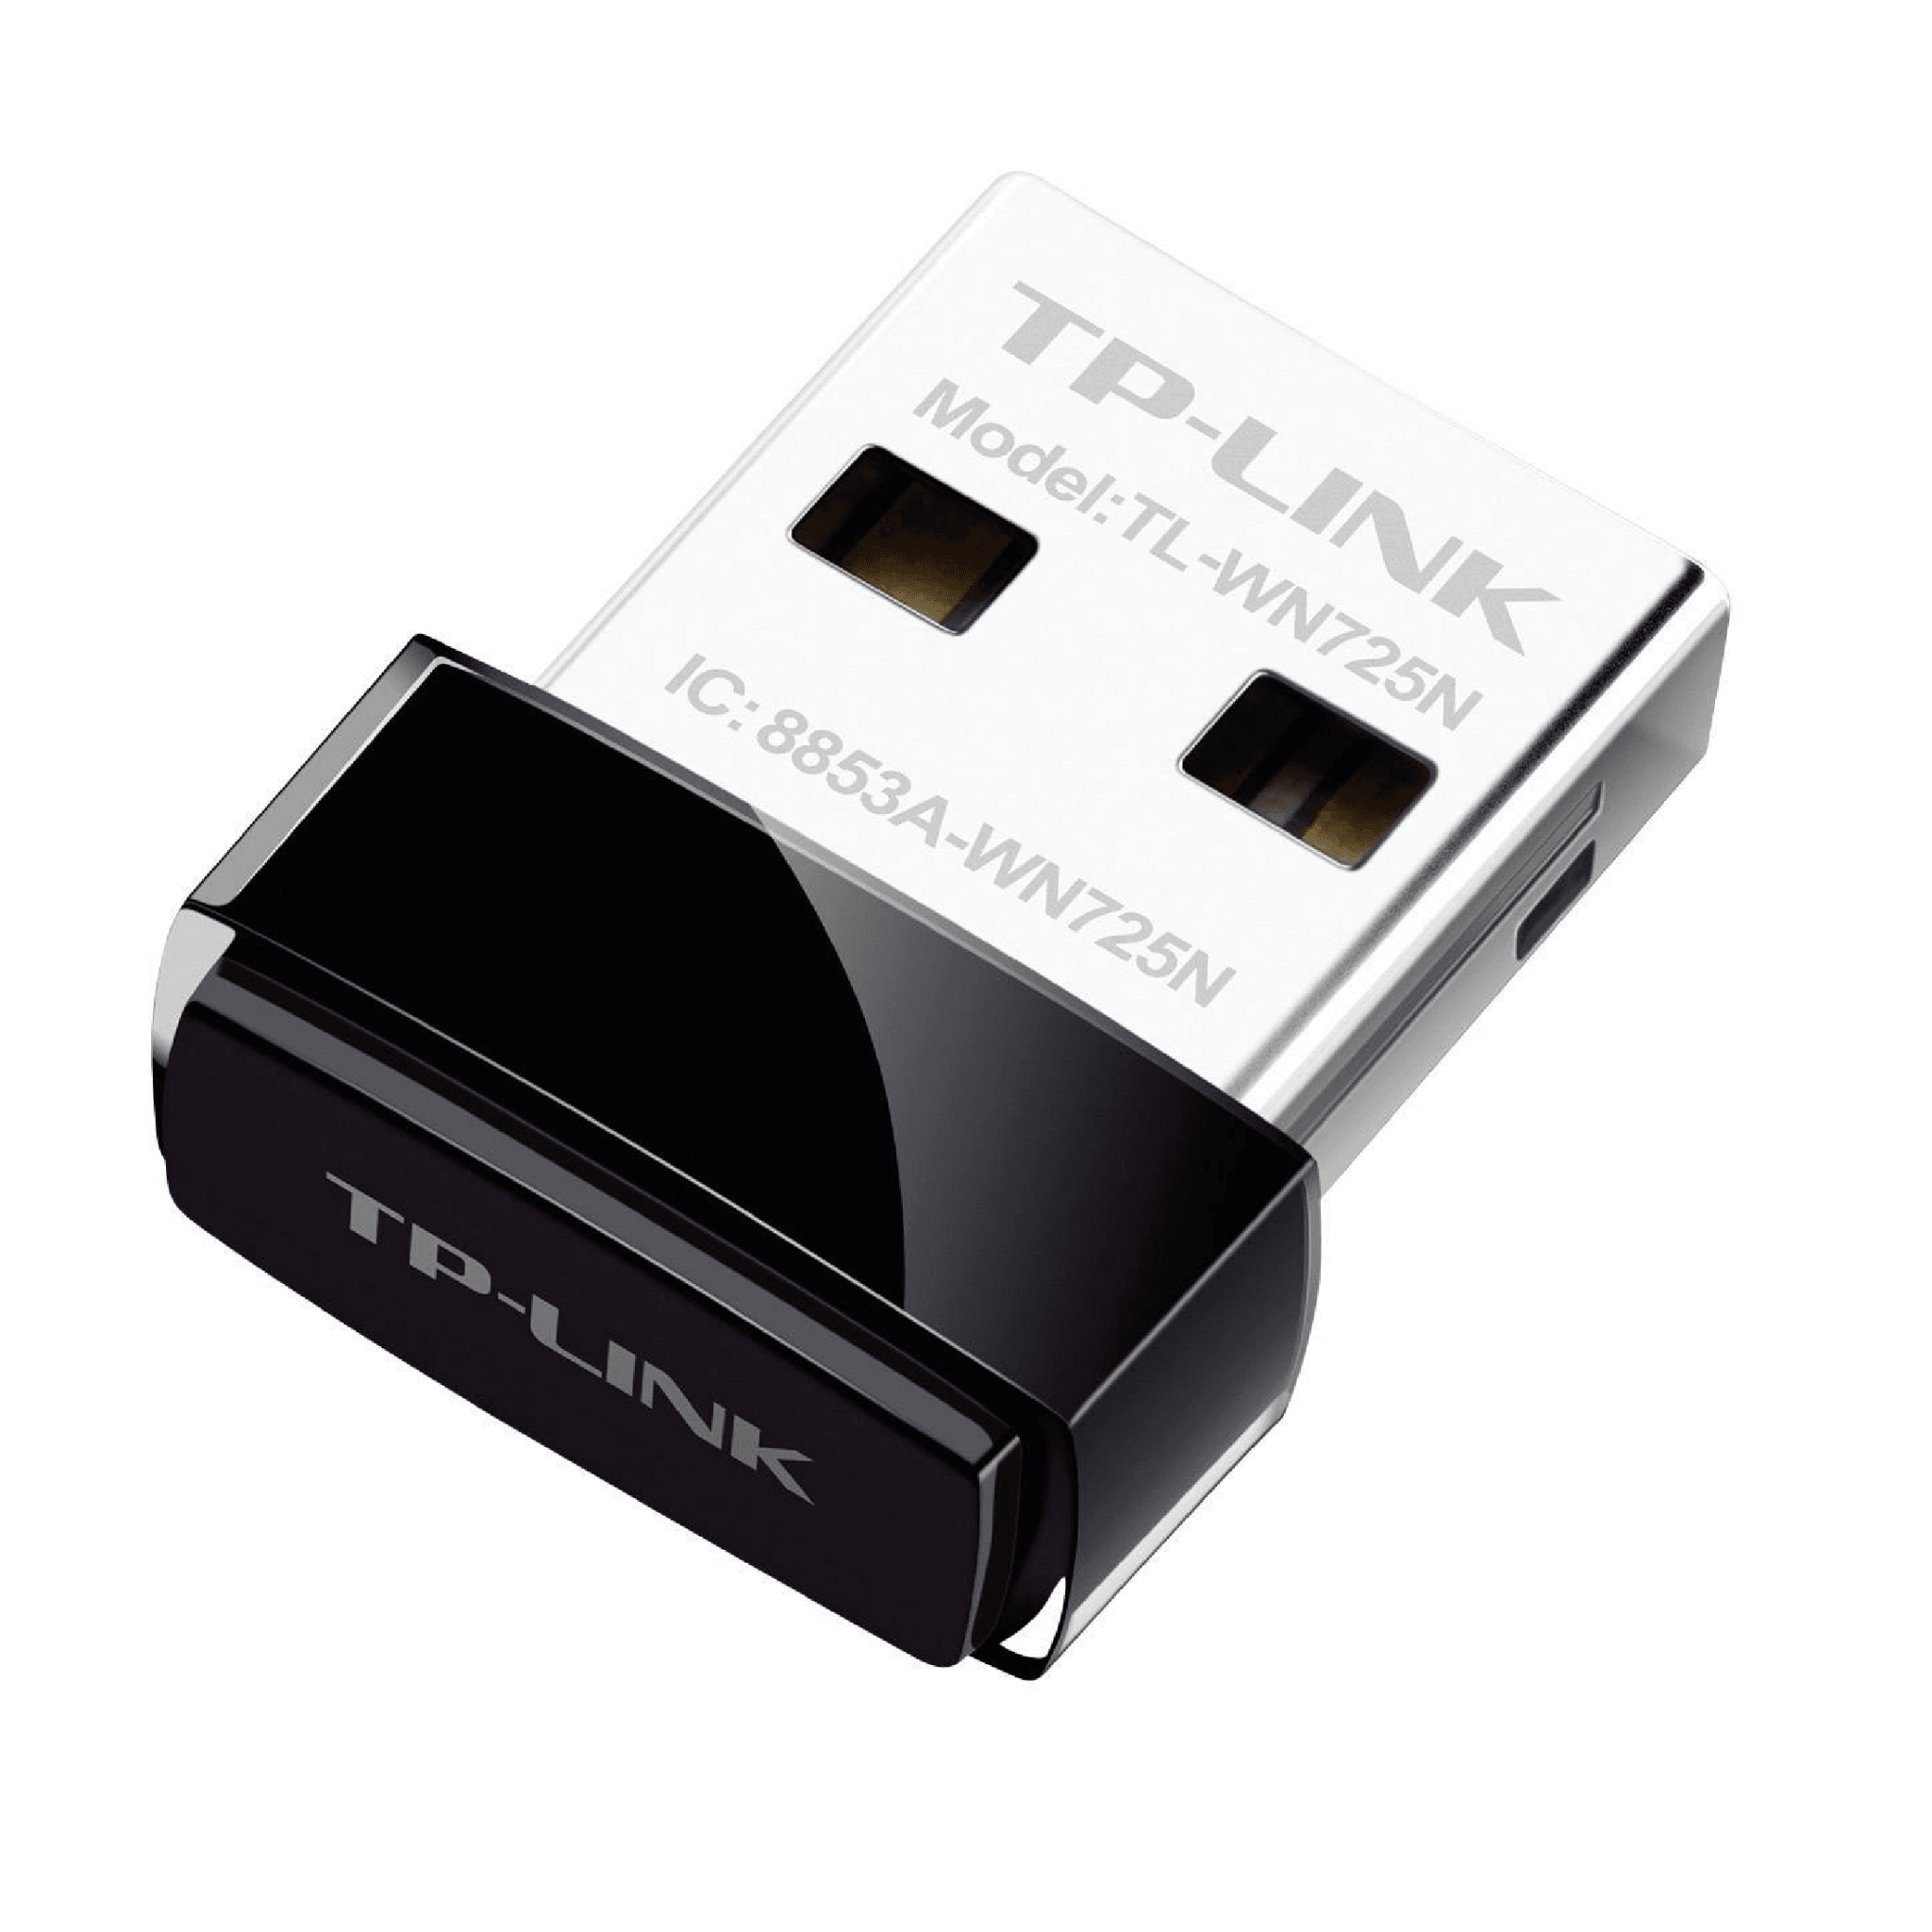 TP-LINK TL-WN725N Wi-Fi dongle USB 2.0 150 Mbps - Store 974 | ستور ٩٧٤